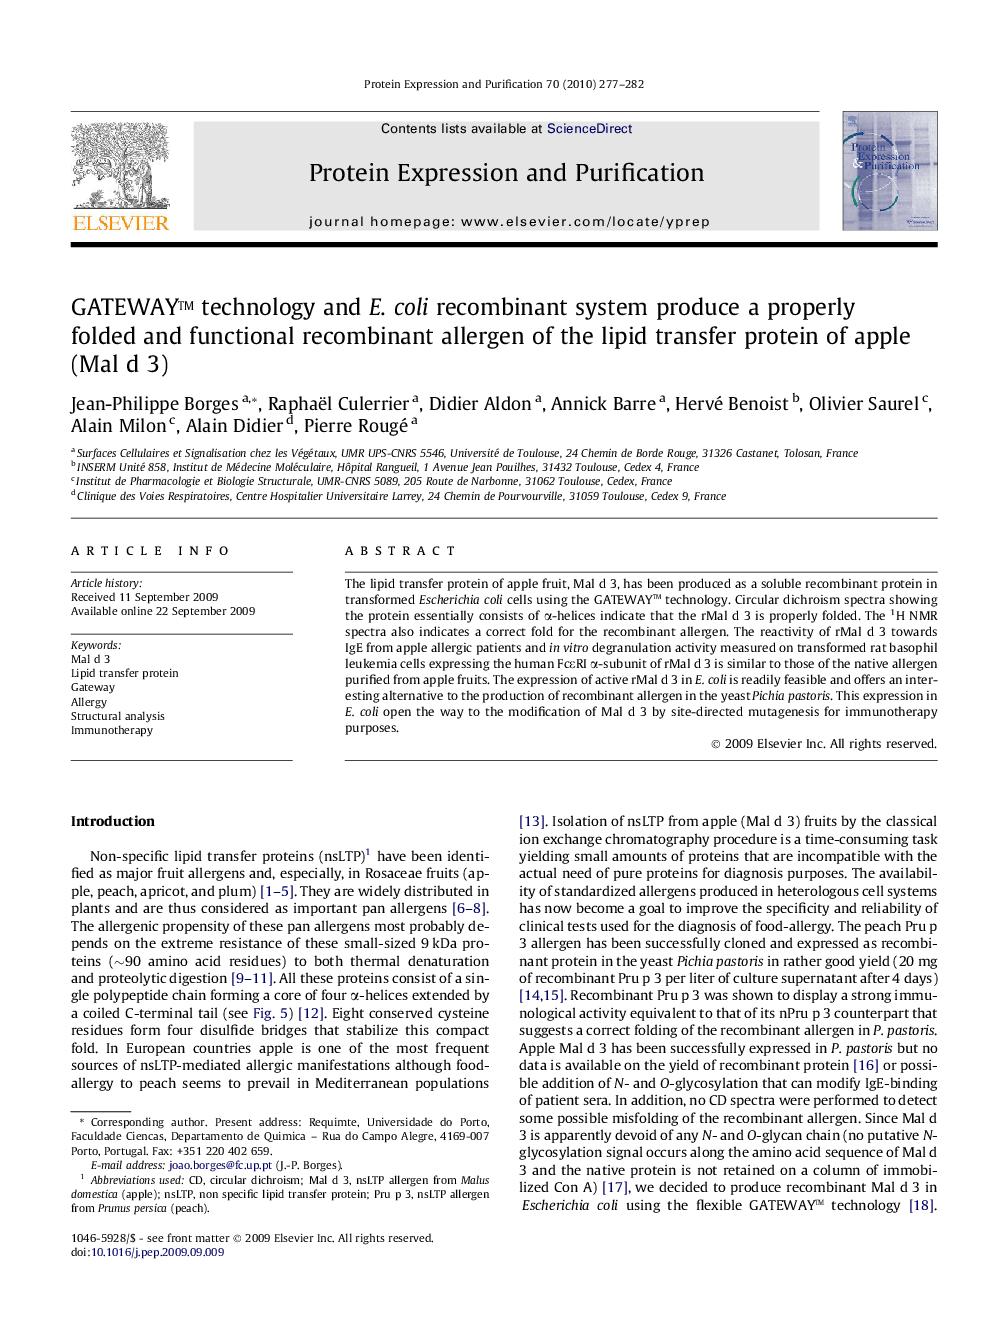 GATEWAYâ¢ technology and E. coli recombinant system produce a properly folded and functional recombinant allergen of the lipid transfer protein of apple (Mal d 3)